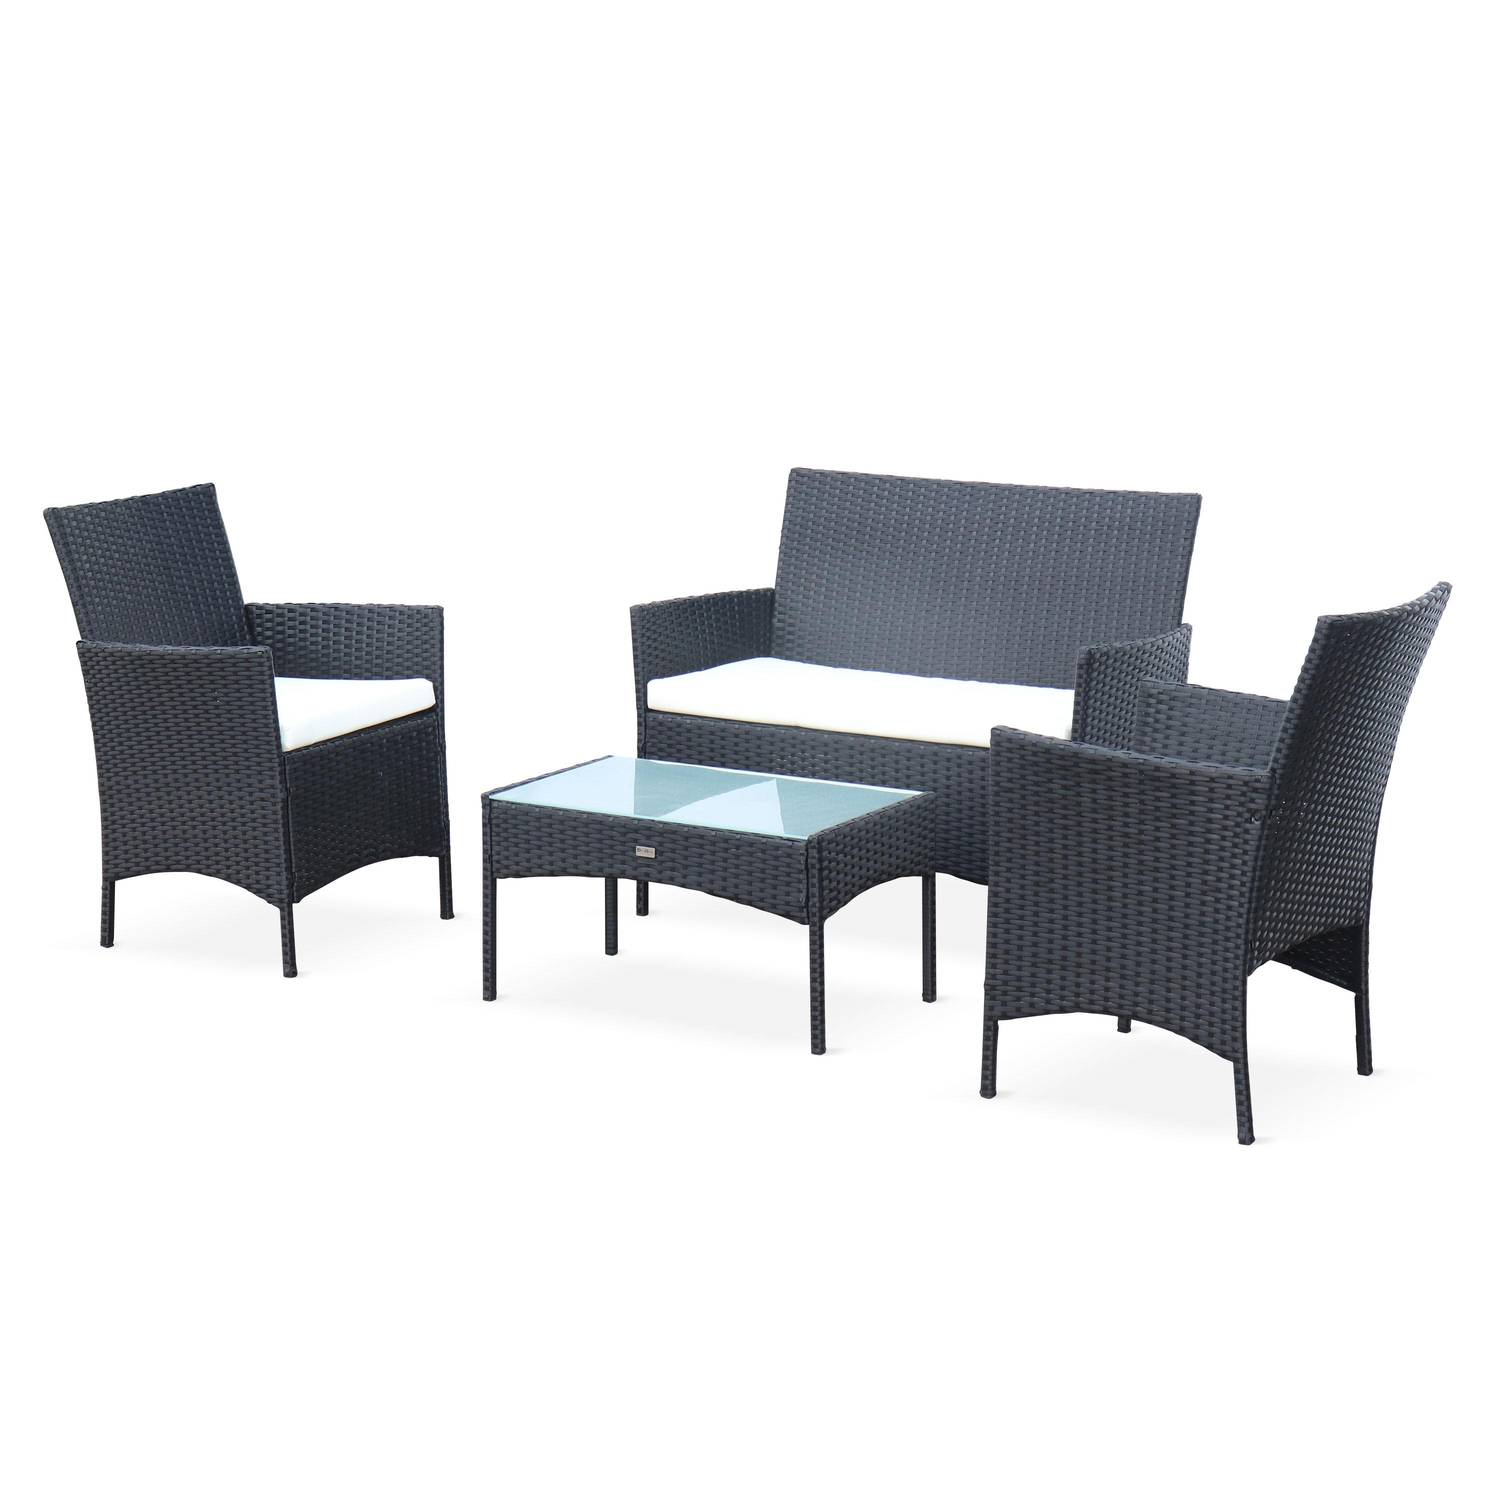 4-seater polyrattan garden sofa set - sofa, 2 armchairs, coffee table - Moltes - Black rattan, Off-white cushions Photo1